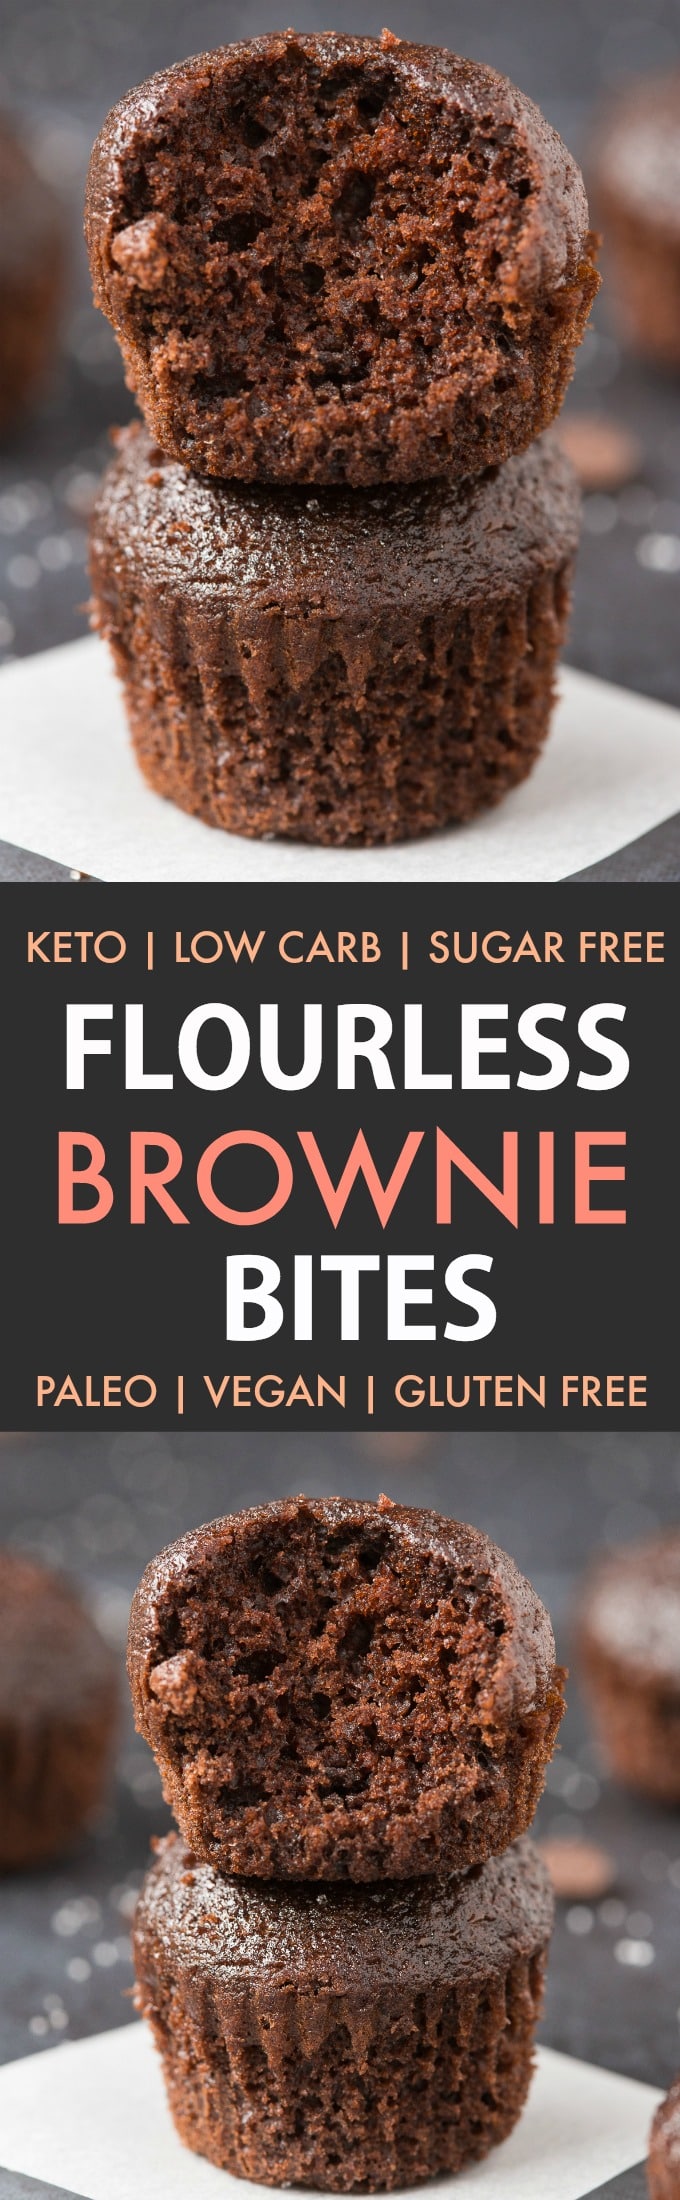 Healthy Flourless Paleo Vegan Brownie Bites in a collage